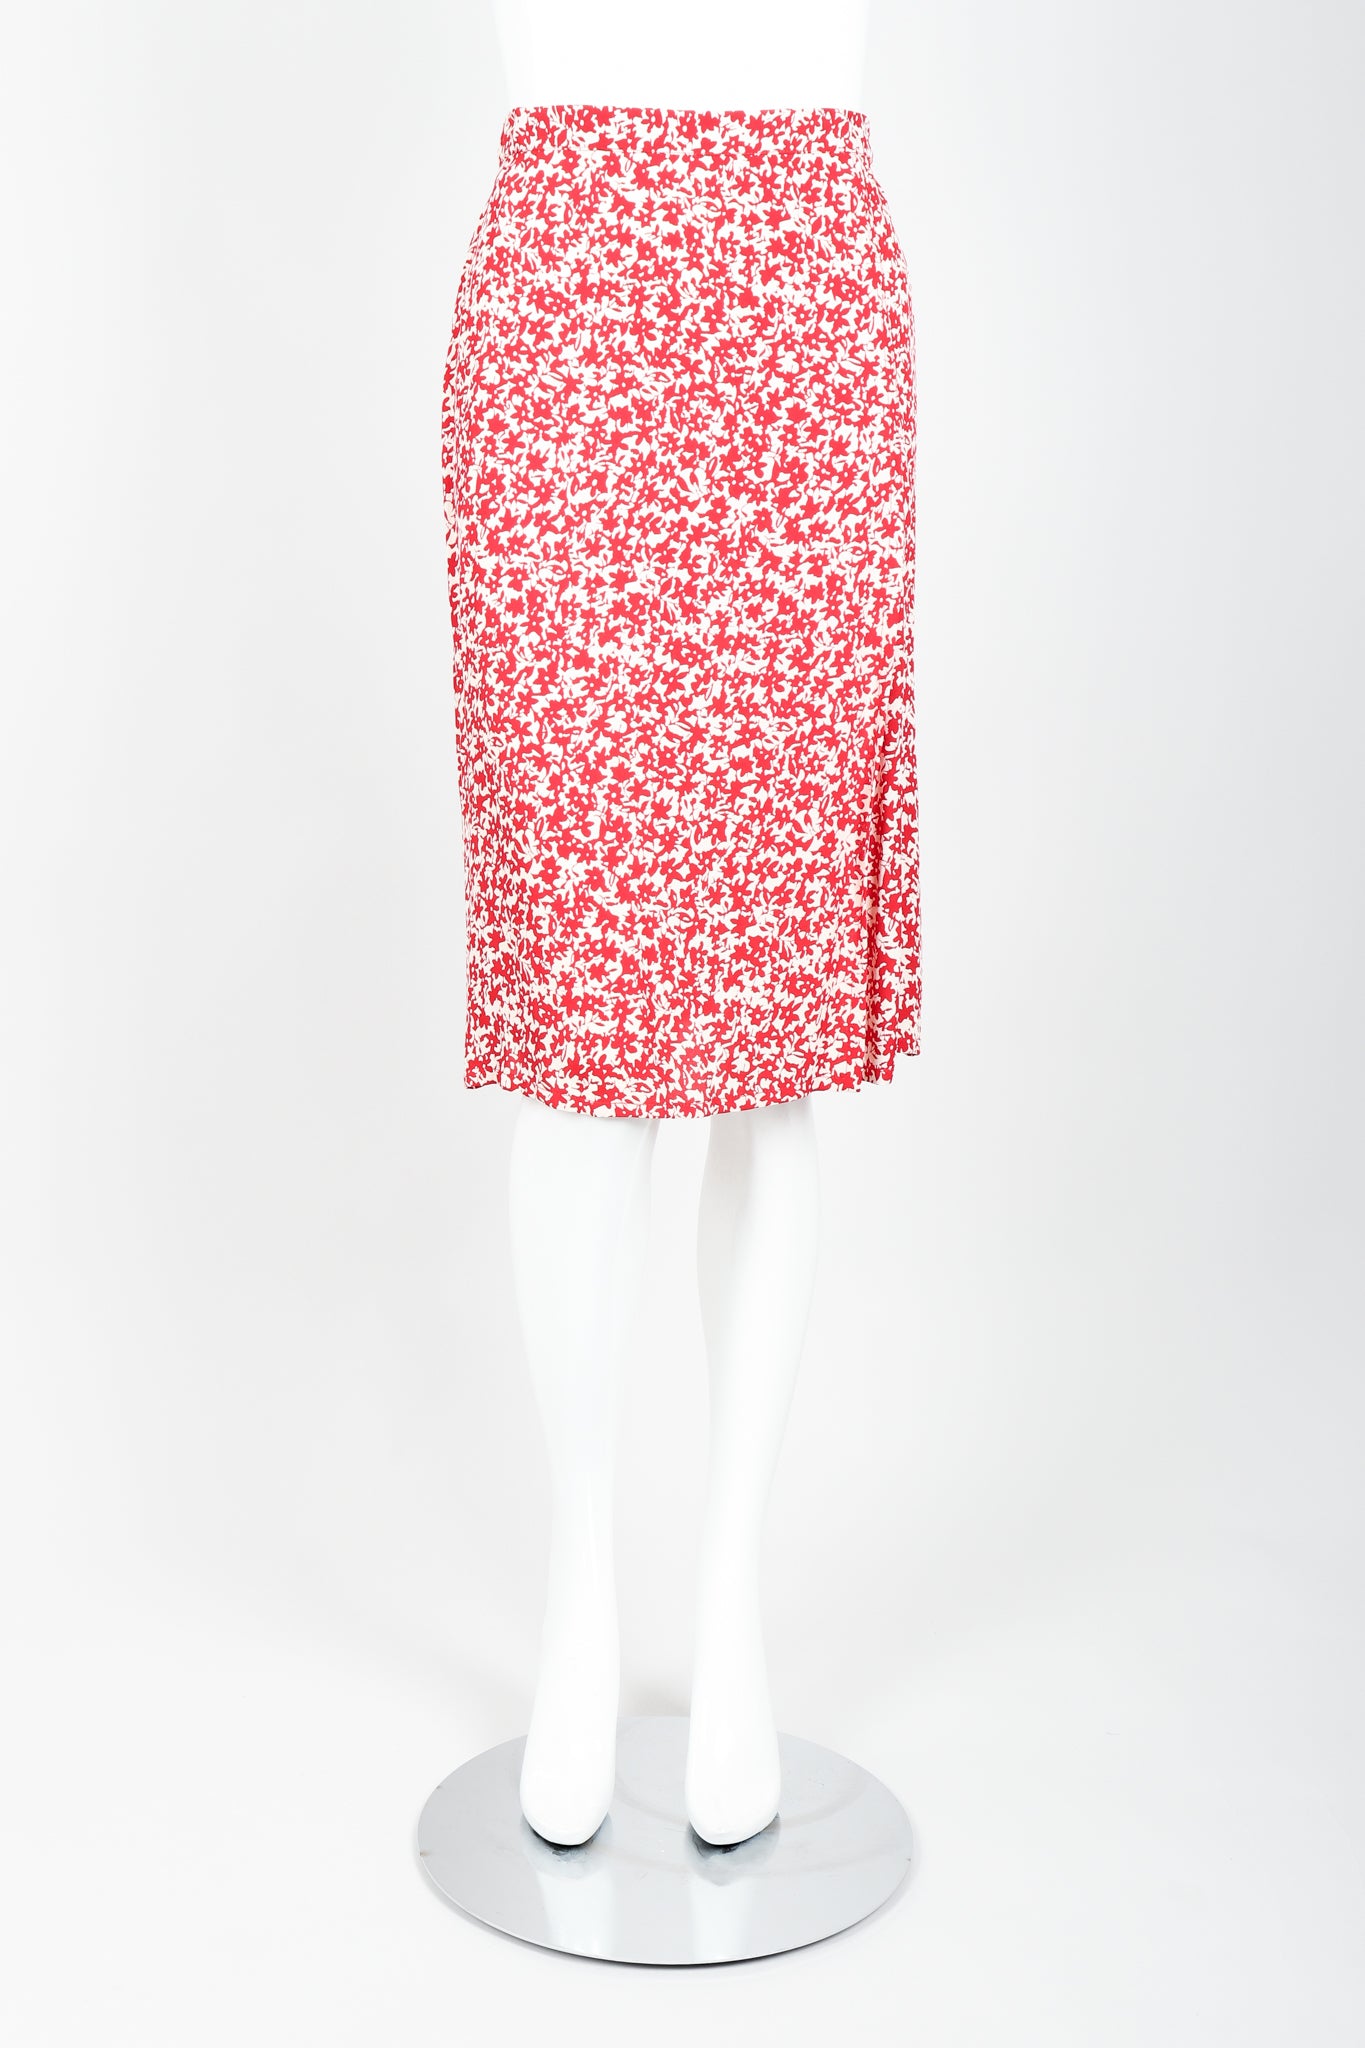 Vintage Sonia Rykiel Graphic Wraparound Top & Skirt Set Front Skirt Crop at Recess